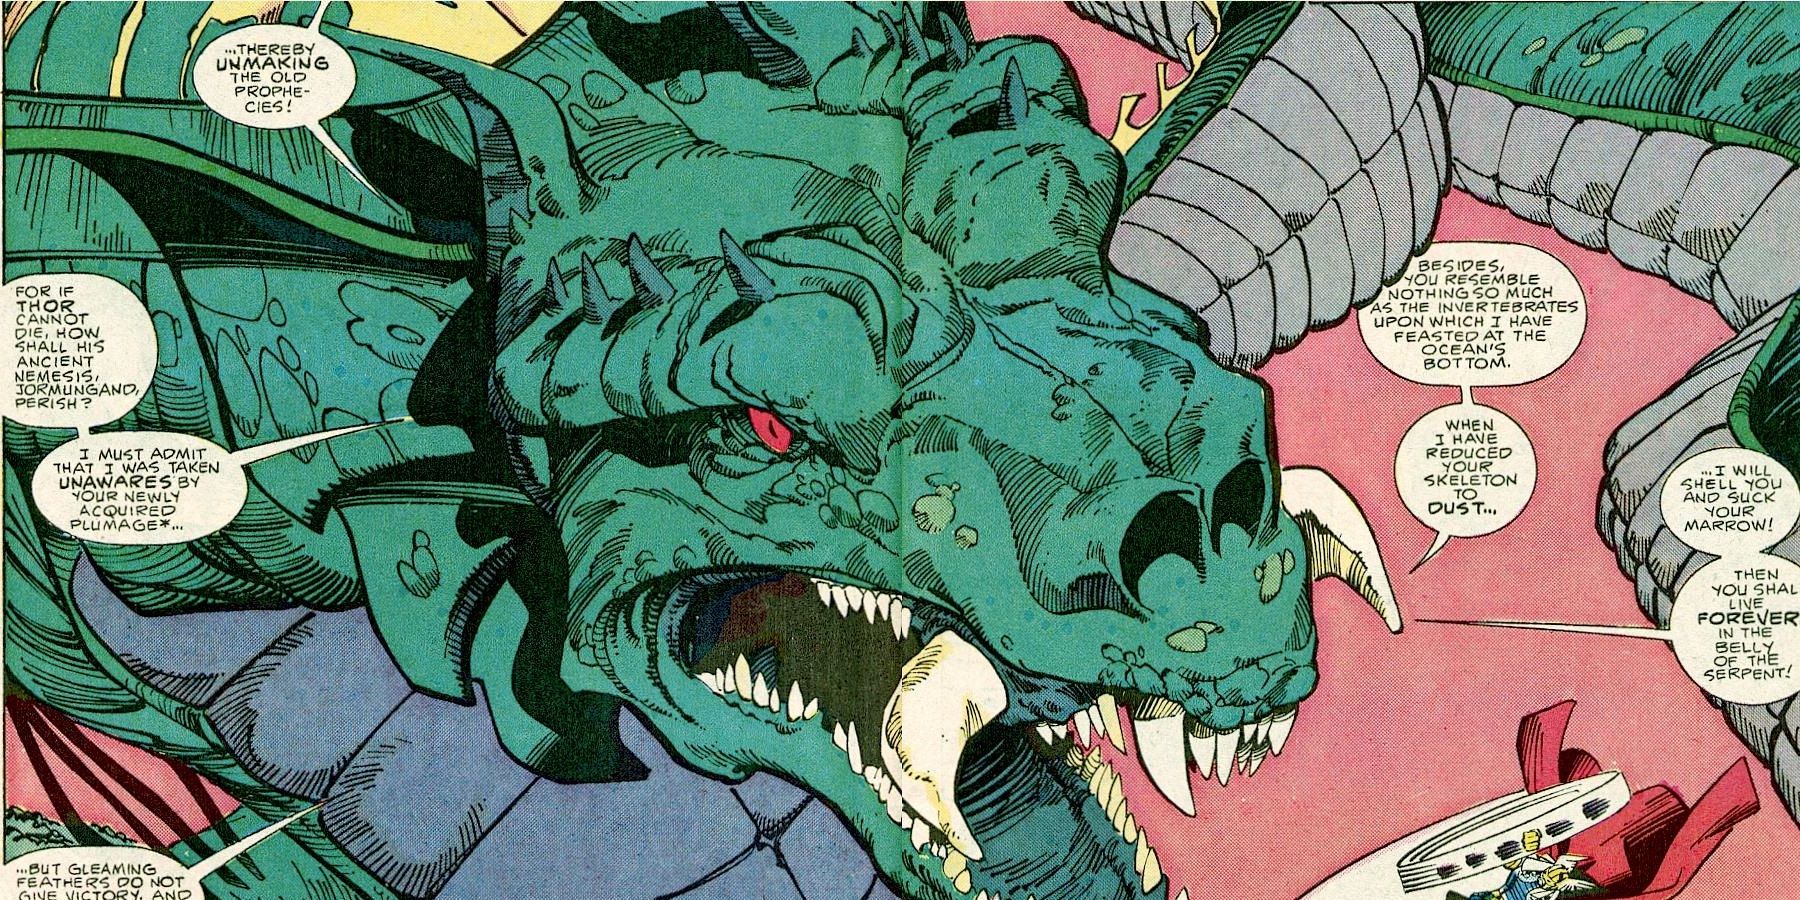 Midgard Serpent fights Thor in Marvel Comics.